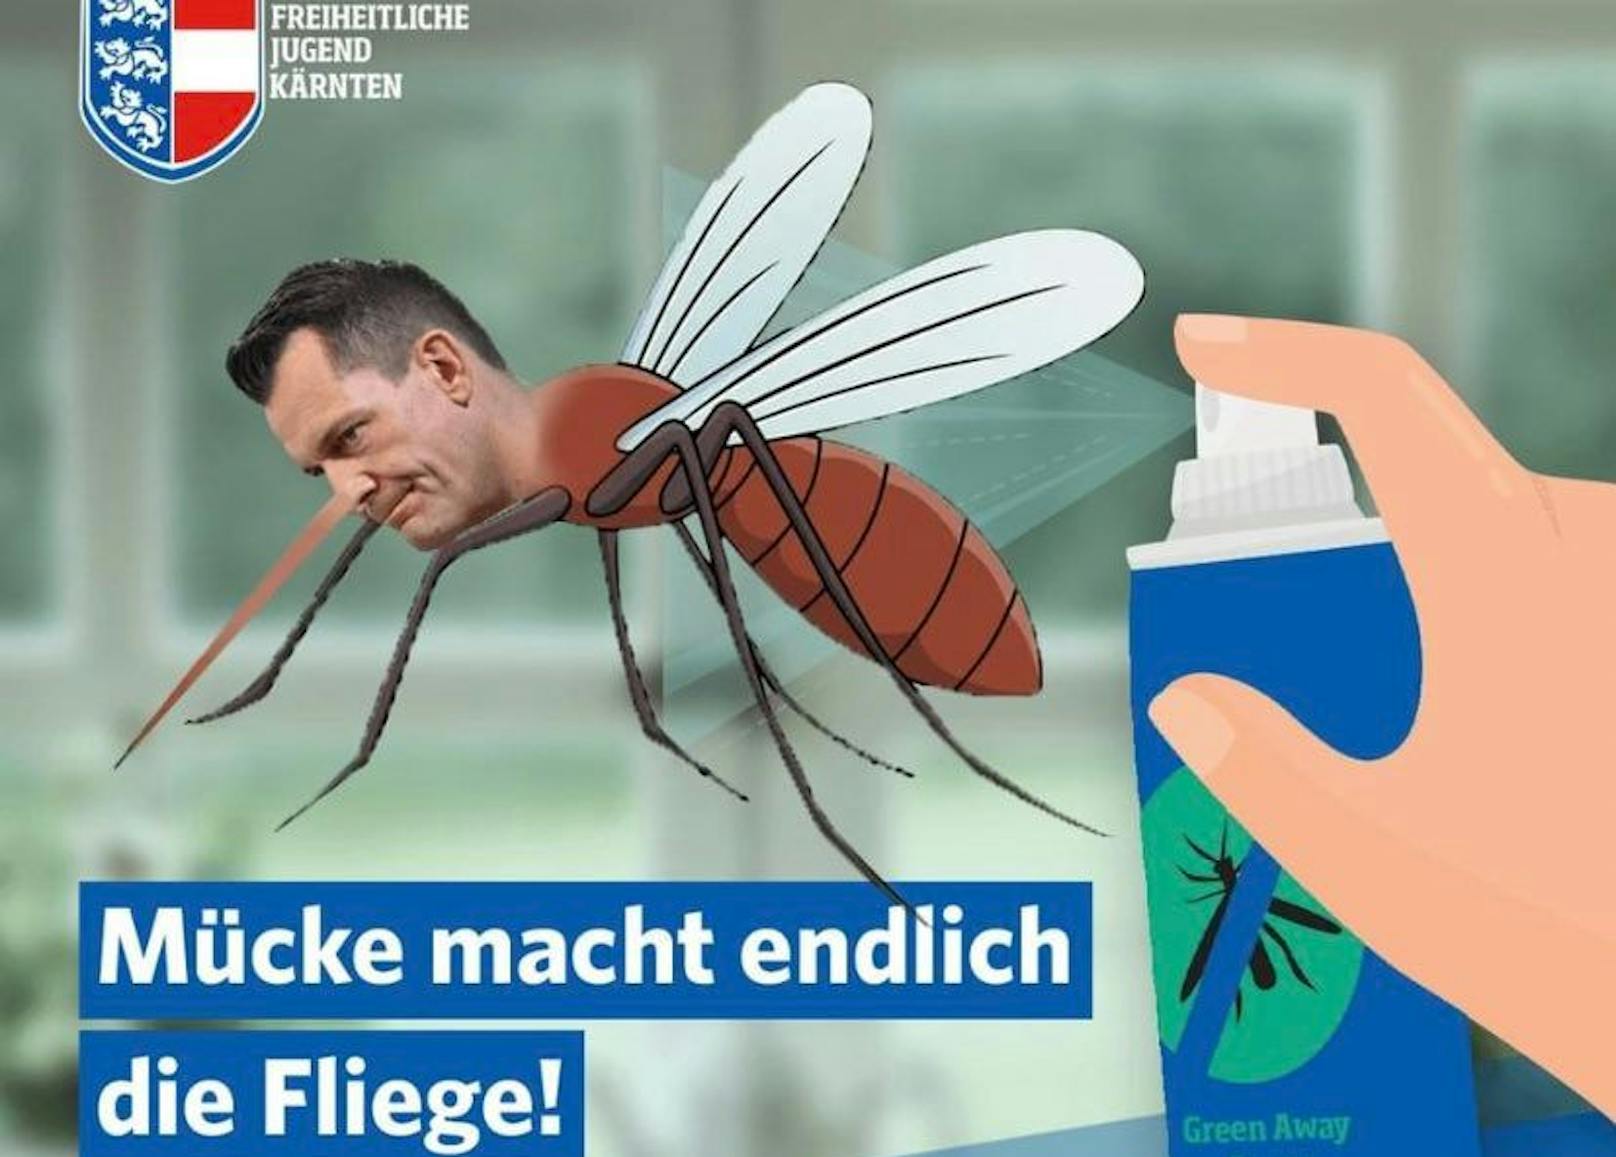 Die Kampagne der FPÖ-Jugend Kärnten